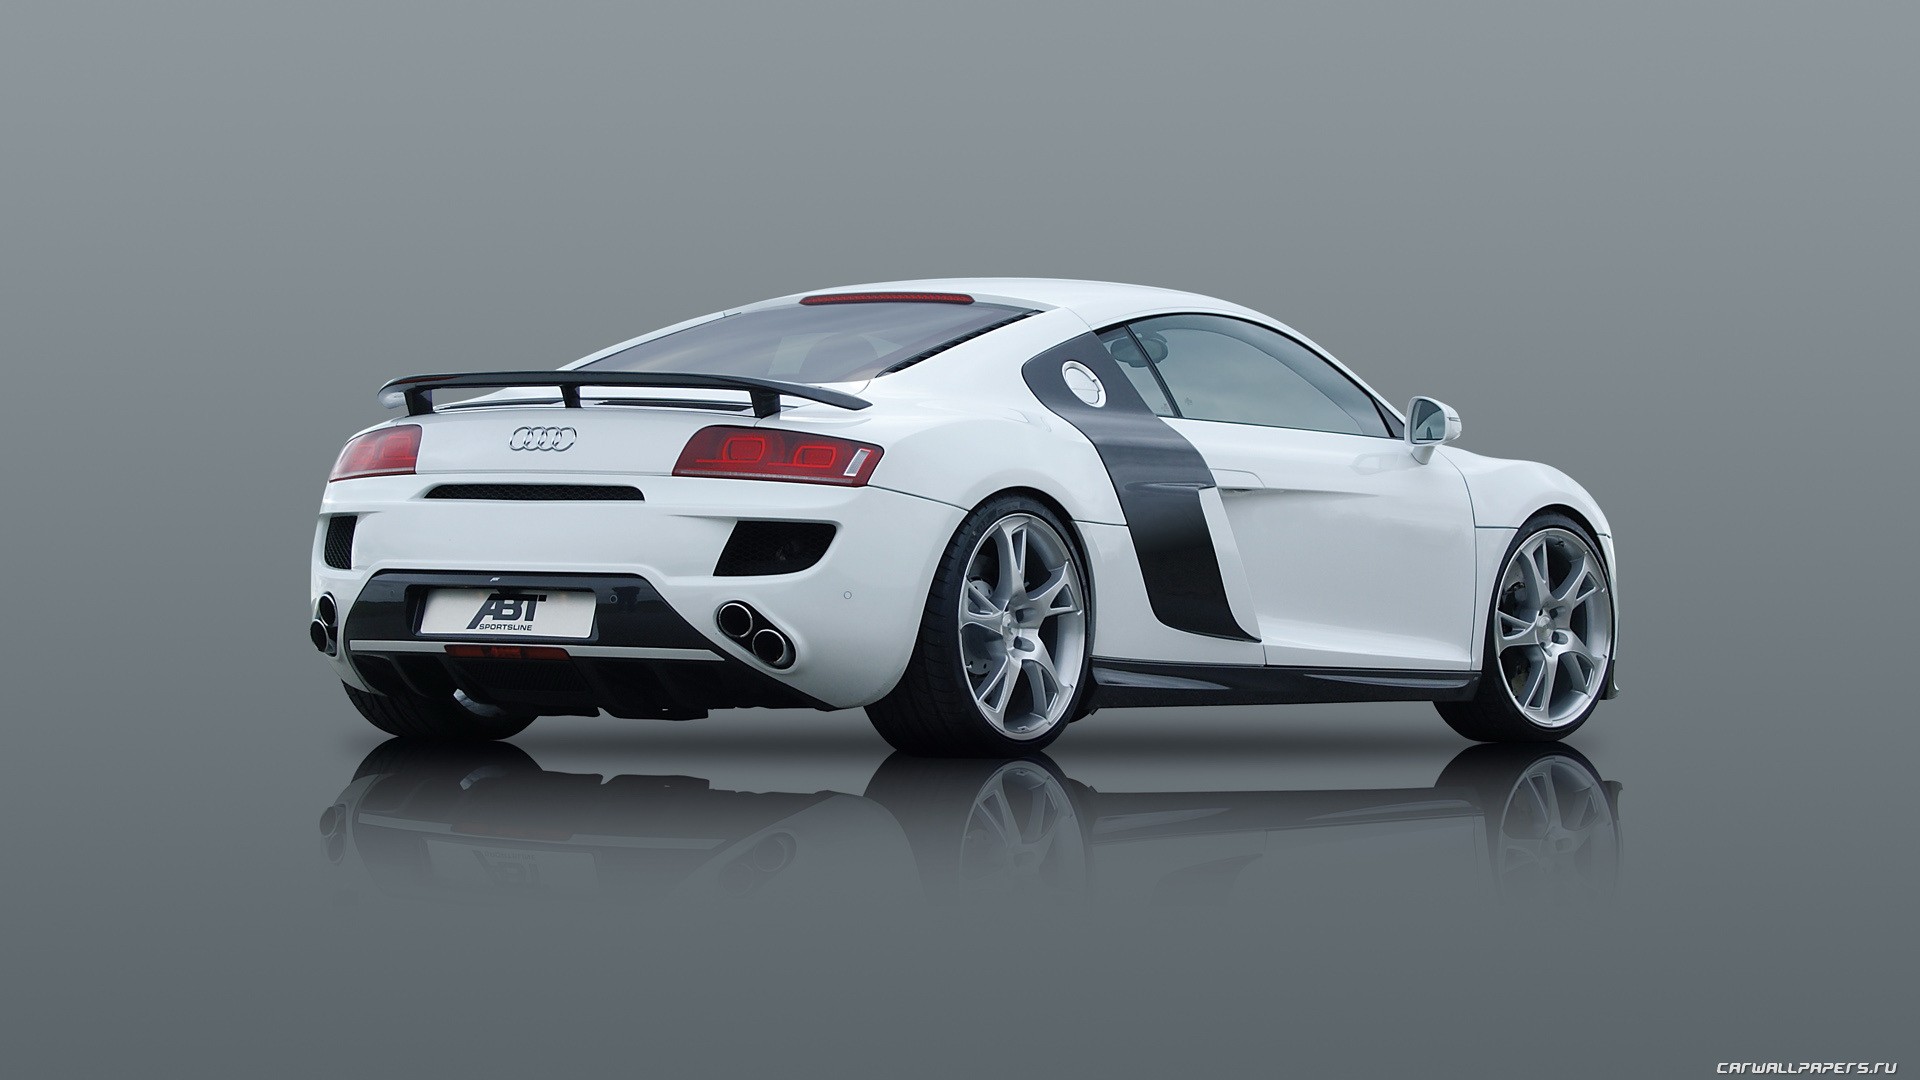 cars, Audi, Audi R8, Audi TT, white cars - desktop wallpaper